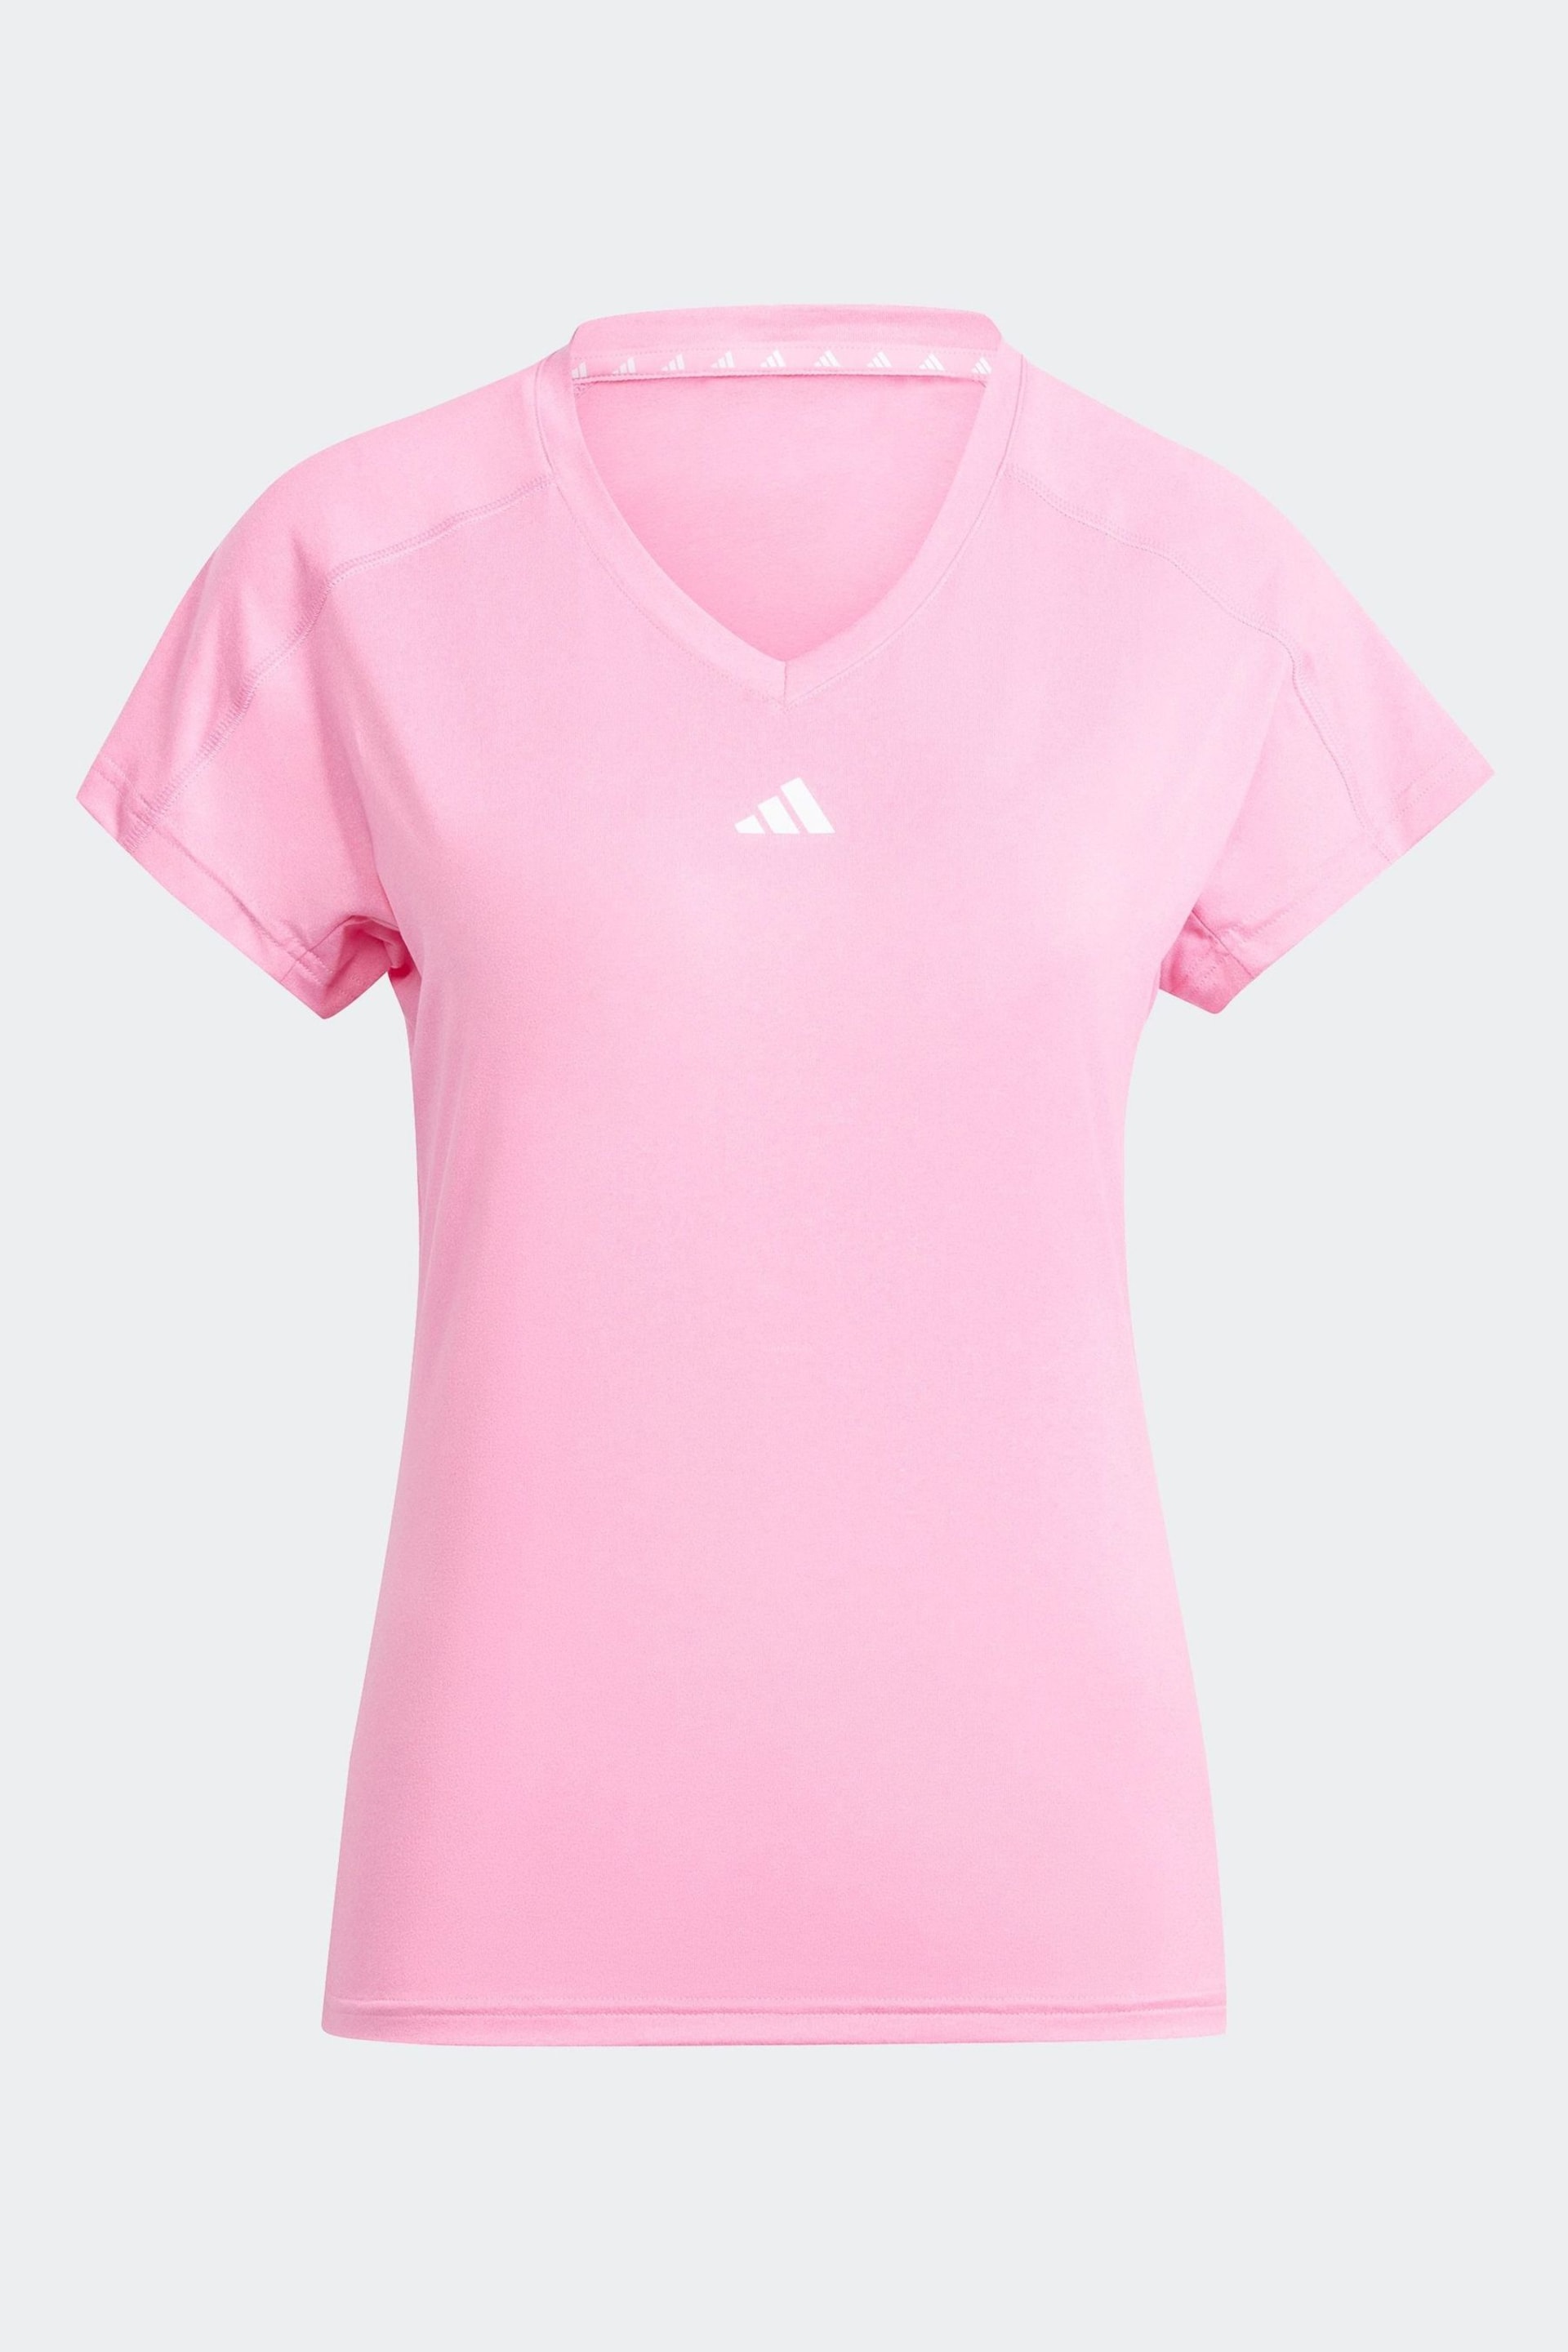 adidas Pink Aeroready Train Essentials Minimal Branding V-Neck T-Shirt - Image 7 of 7